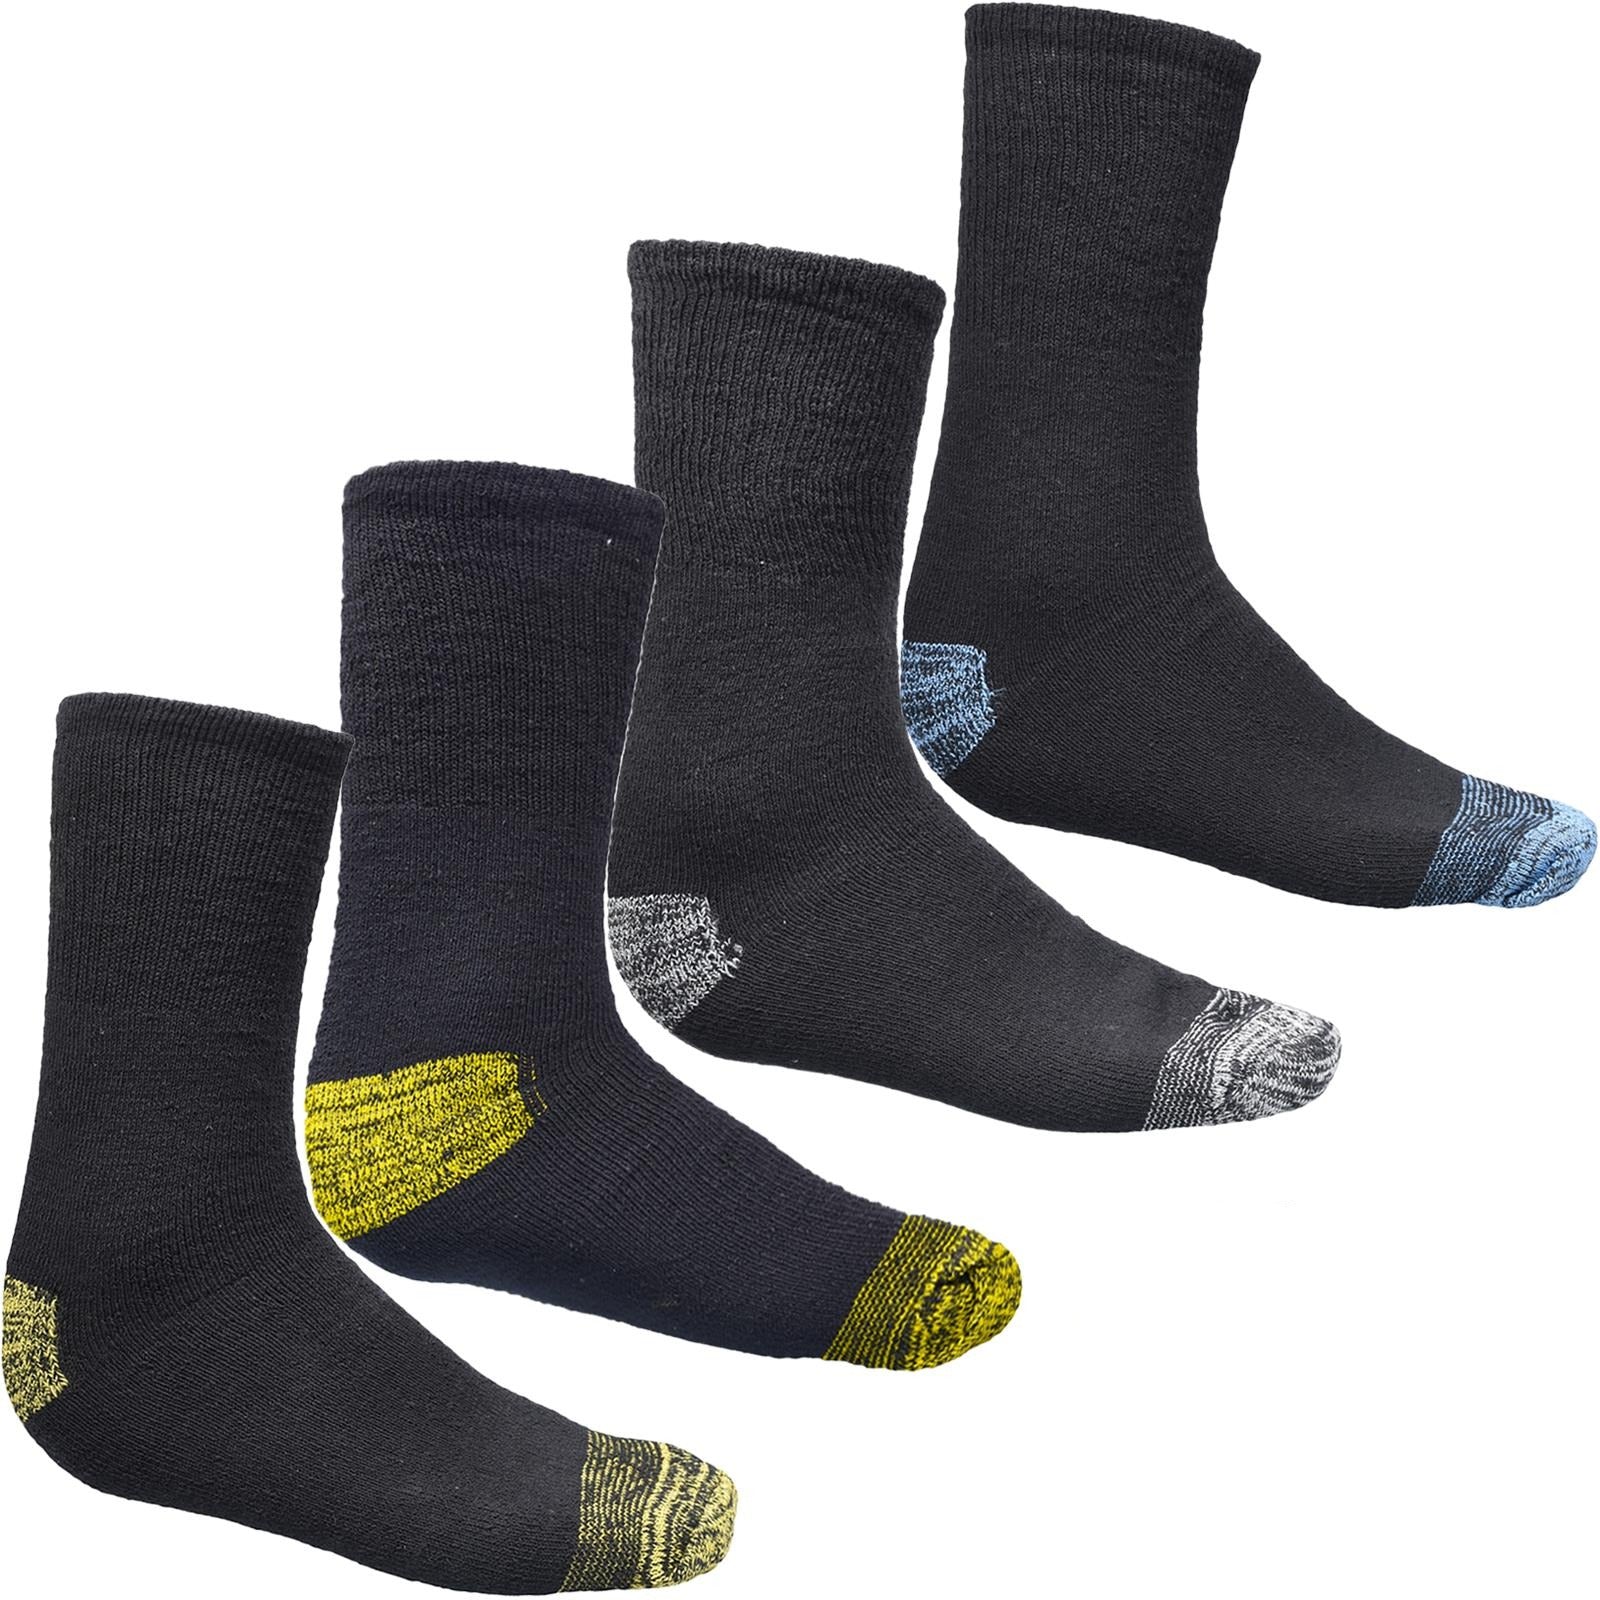 Vince Camuto Dot & Stripe Men's Crew Socks - 3 Pack - Free